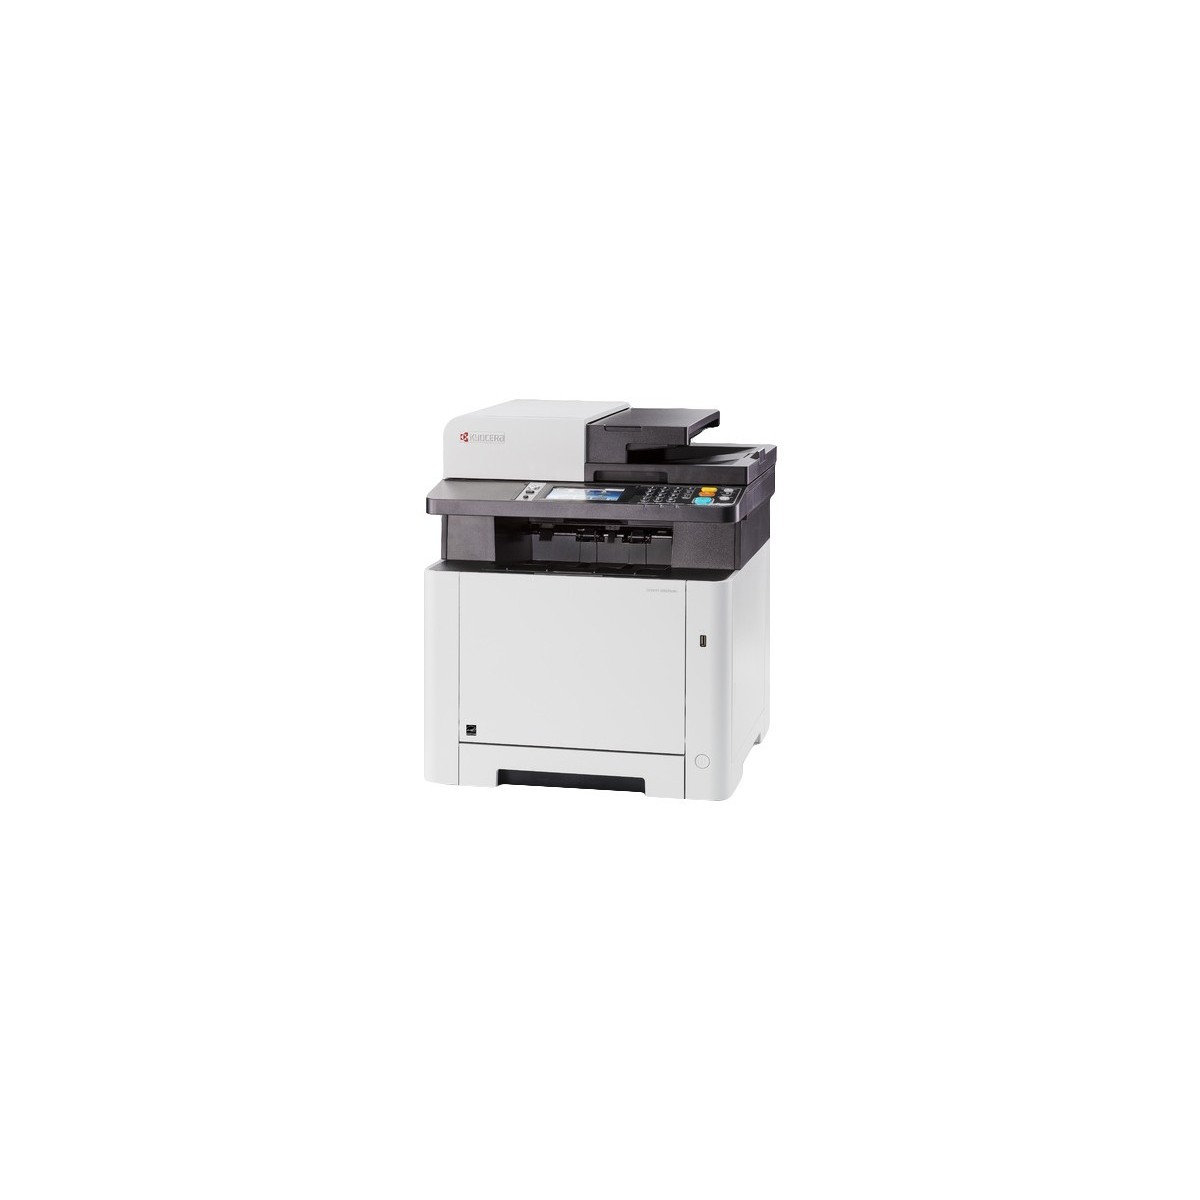 Kyocera ECOSYS M5526cdn/KL3 - Laser - Colour printing - 9600 x 600 DPI - A4 - Direct printing - Black - White